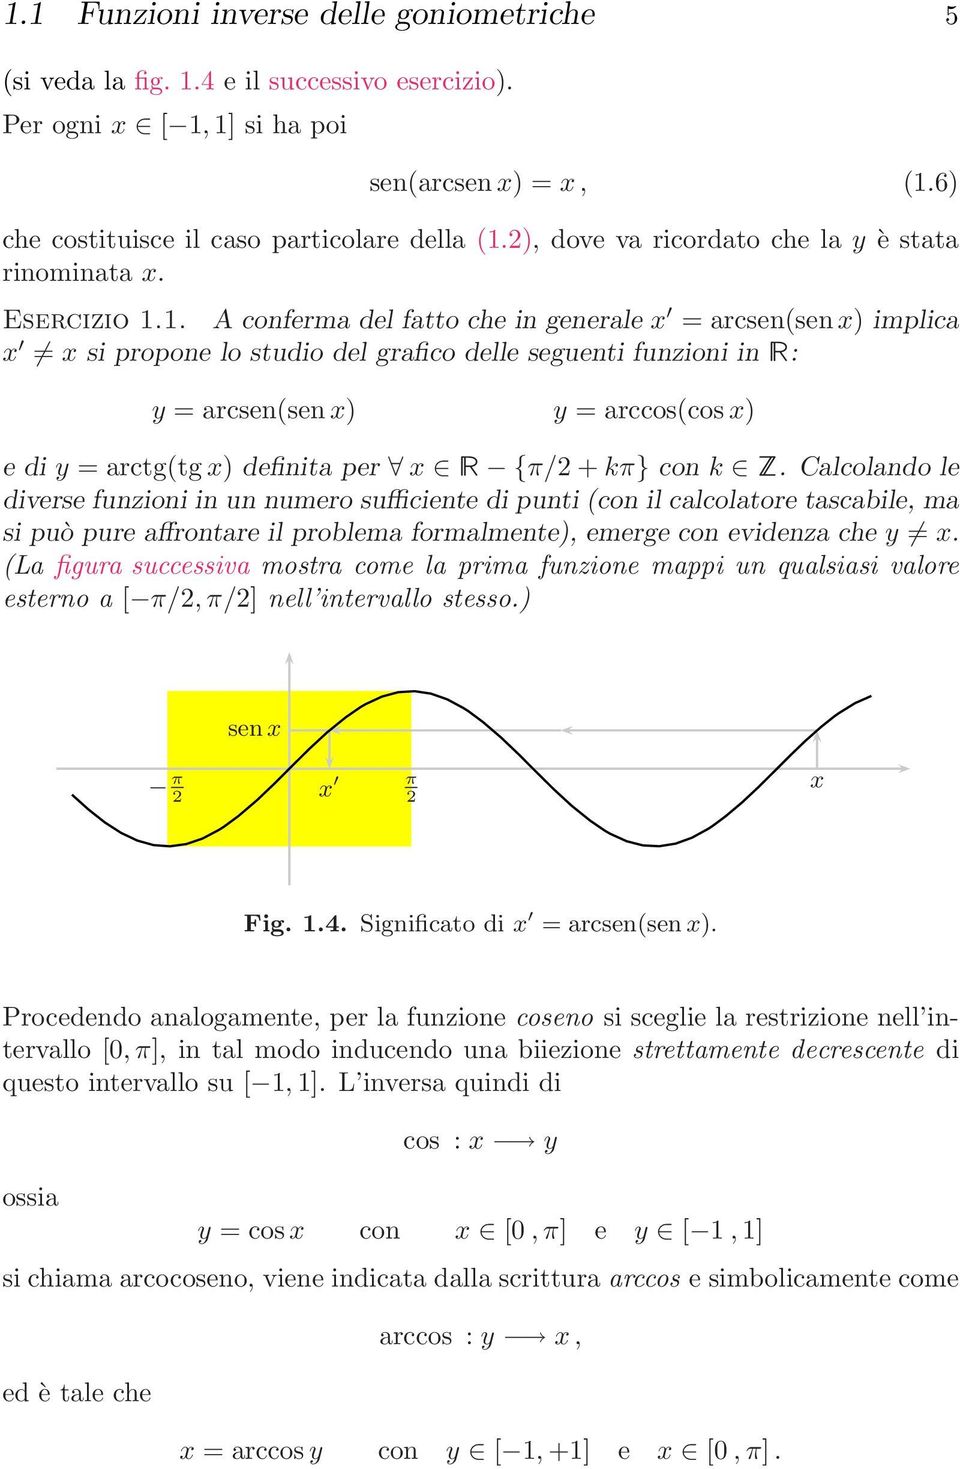 . A conferma del fatto che in generale x = arcsen(sen x) implica x x si propone lo studio del grafico delle seguenti funzioni in R: y = arcsen(sen x) y = arccos(cos x) ediy = arctg(tg x) definita per